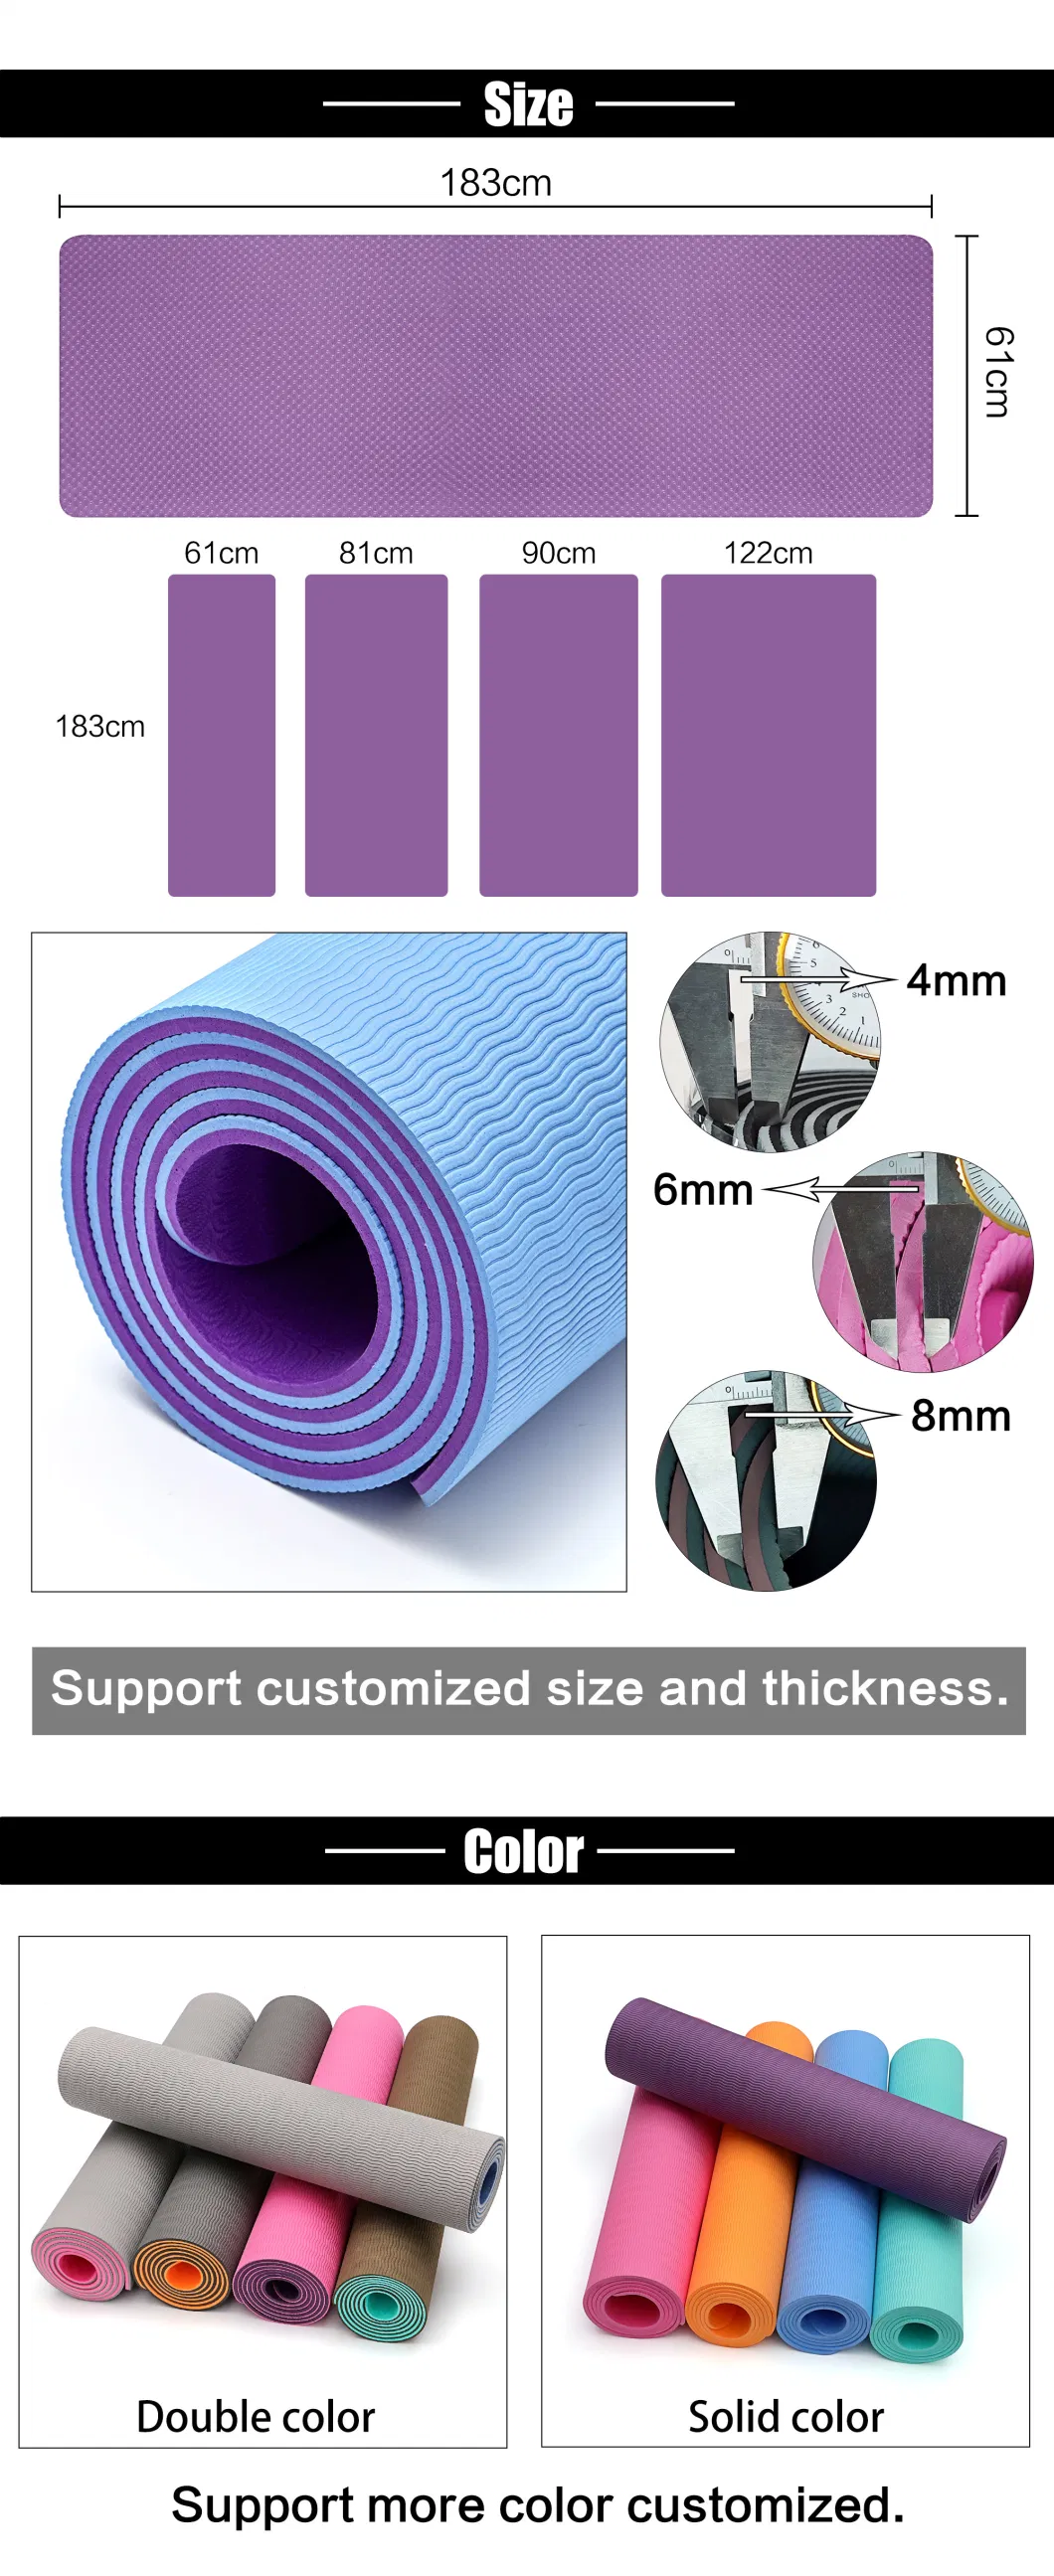 Wholesale Yoga Mats Teal Original Eco Friendly Natural Rubber Folding Exercise Fitness Yoga Mat